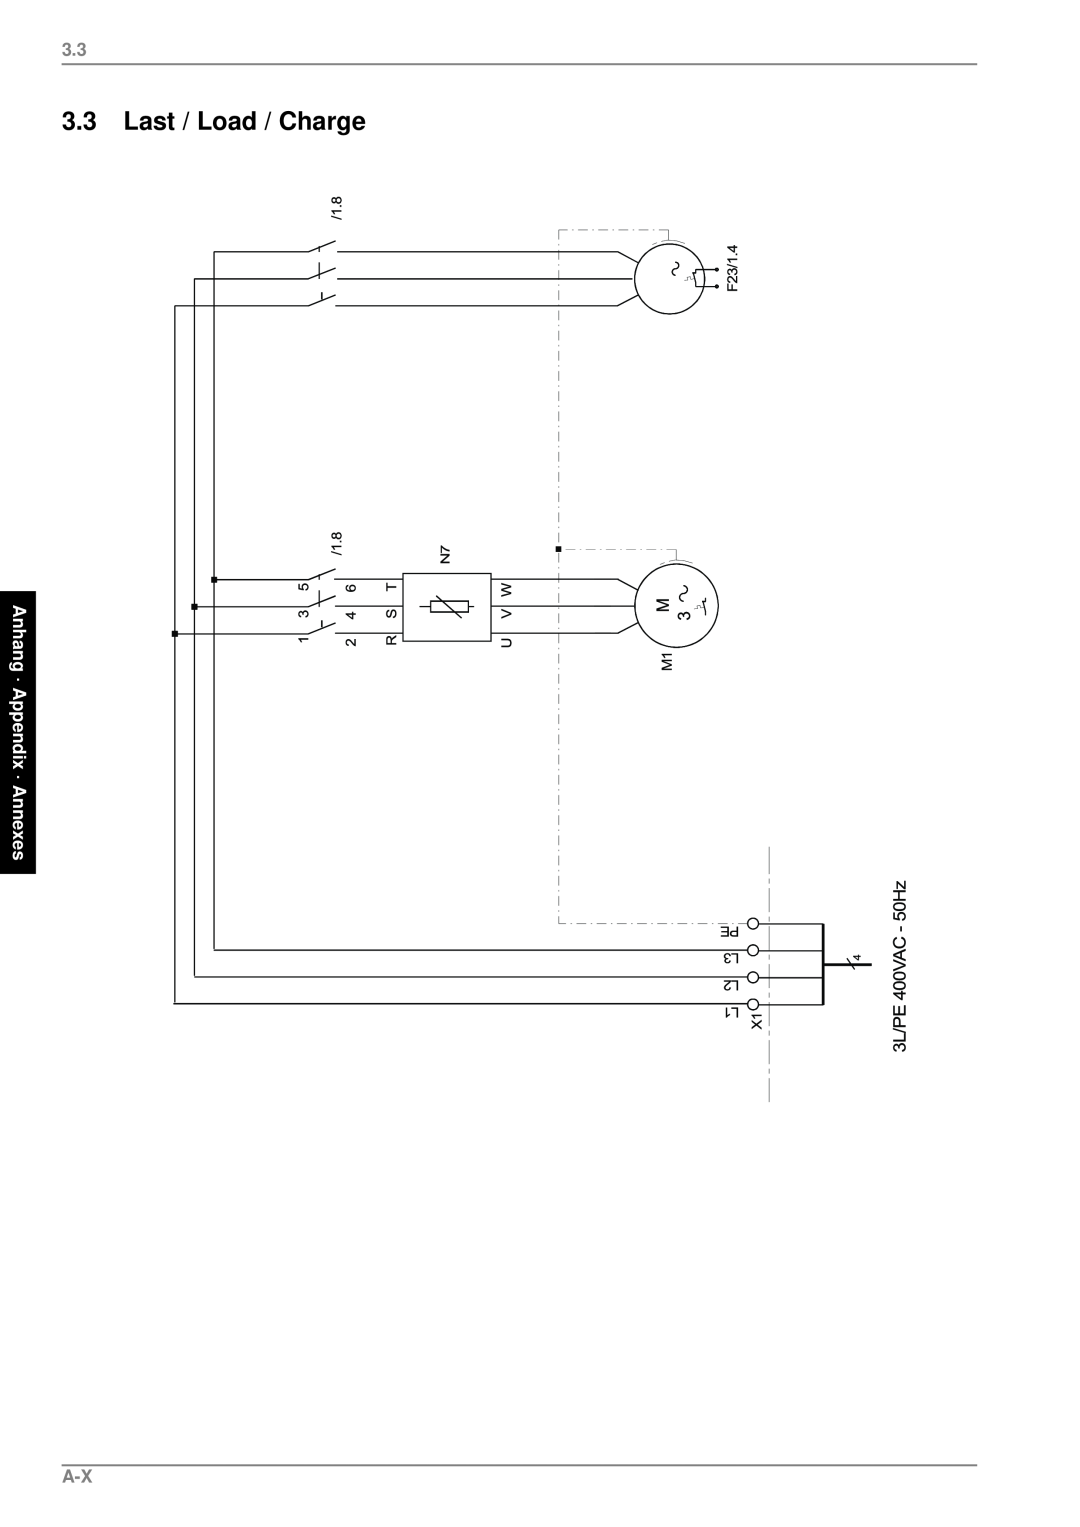 Dimplex LI 11TER+, Heat Pump, 190, LI 16TER+ manual 3.3Last / Load / Charge, Anhang · Appendix · Annexes 